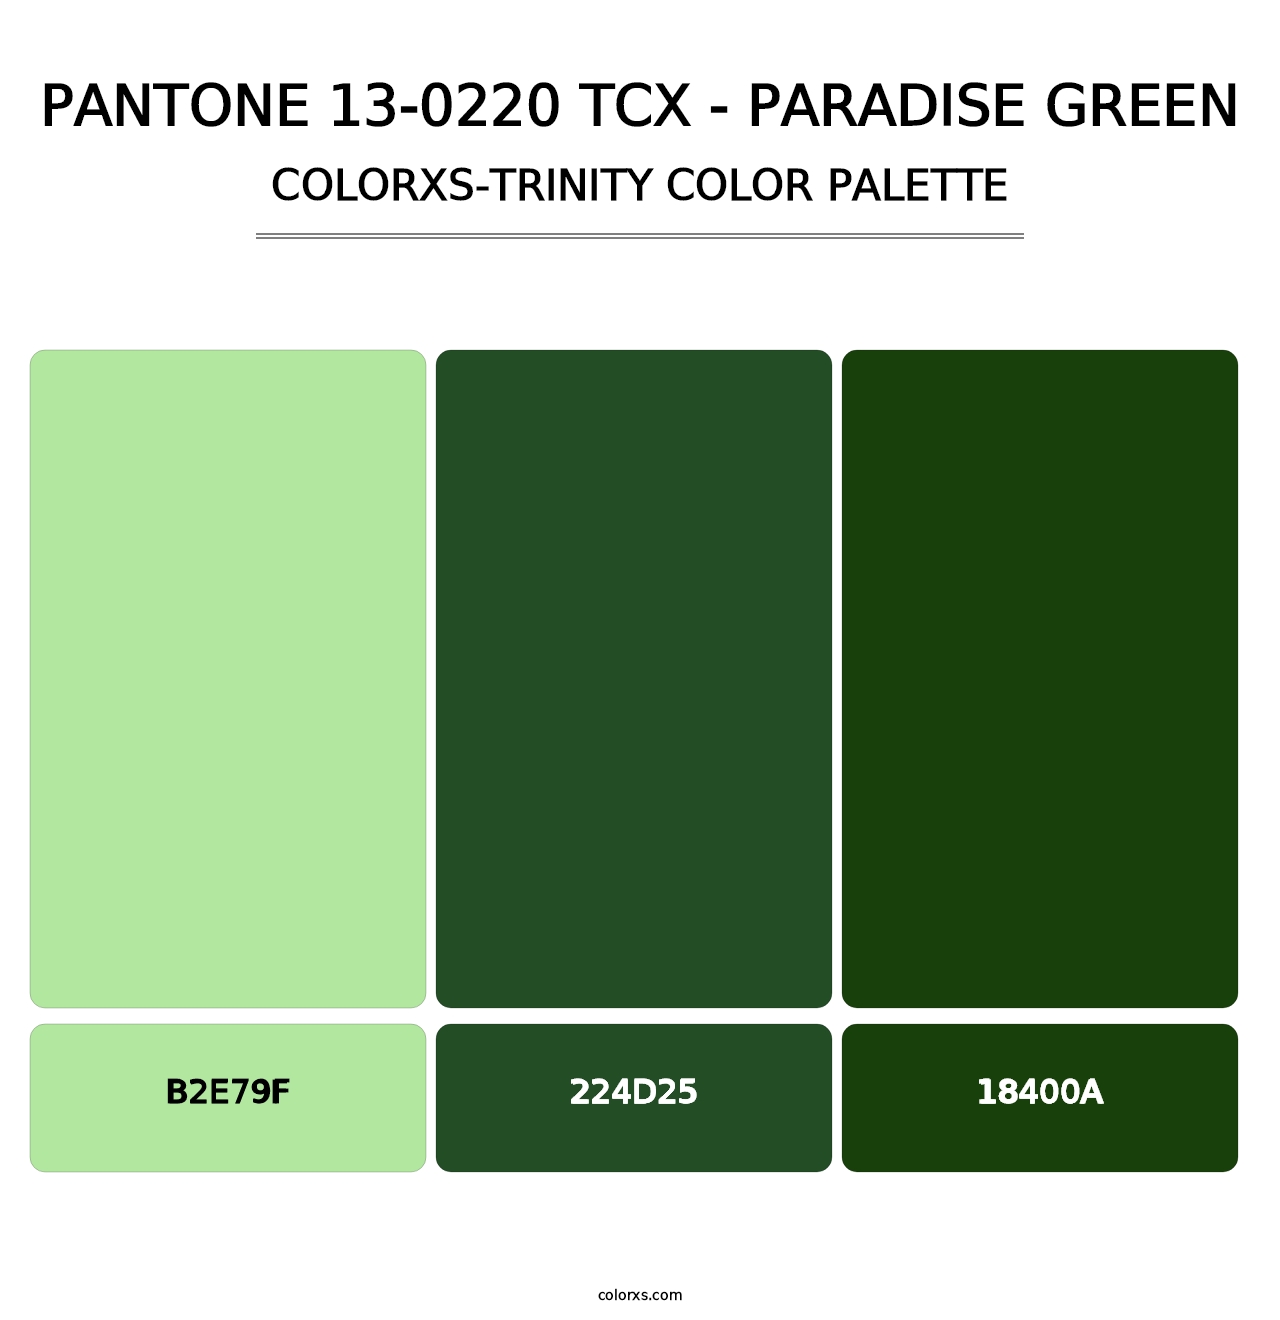 PANTONE 13-0220 TCX - Paradise Green - Colorxs Trinity Palette